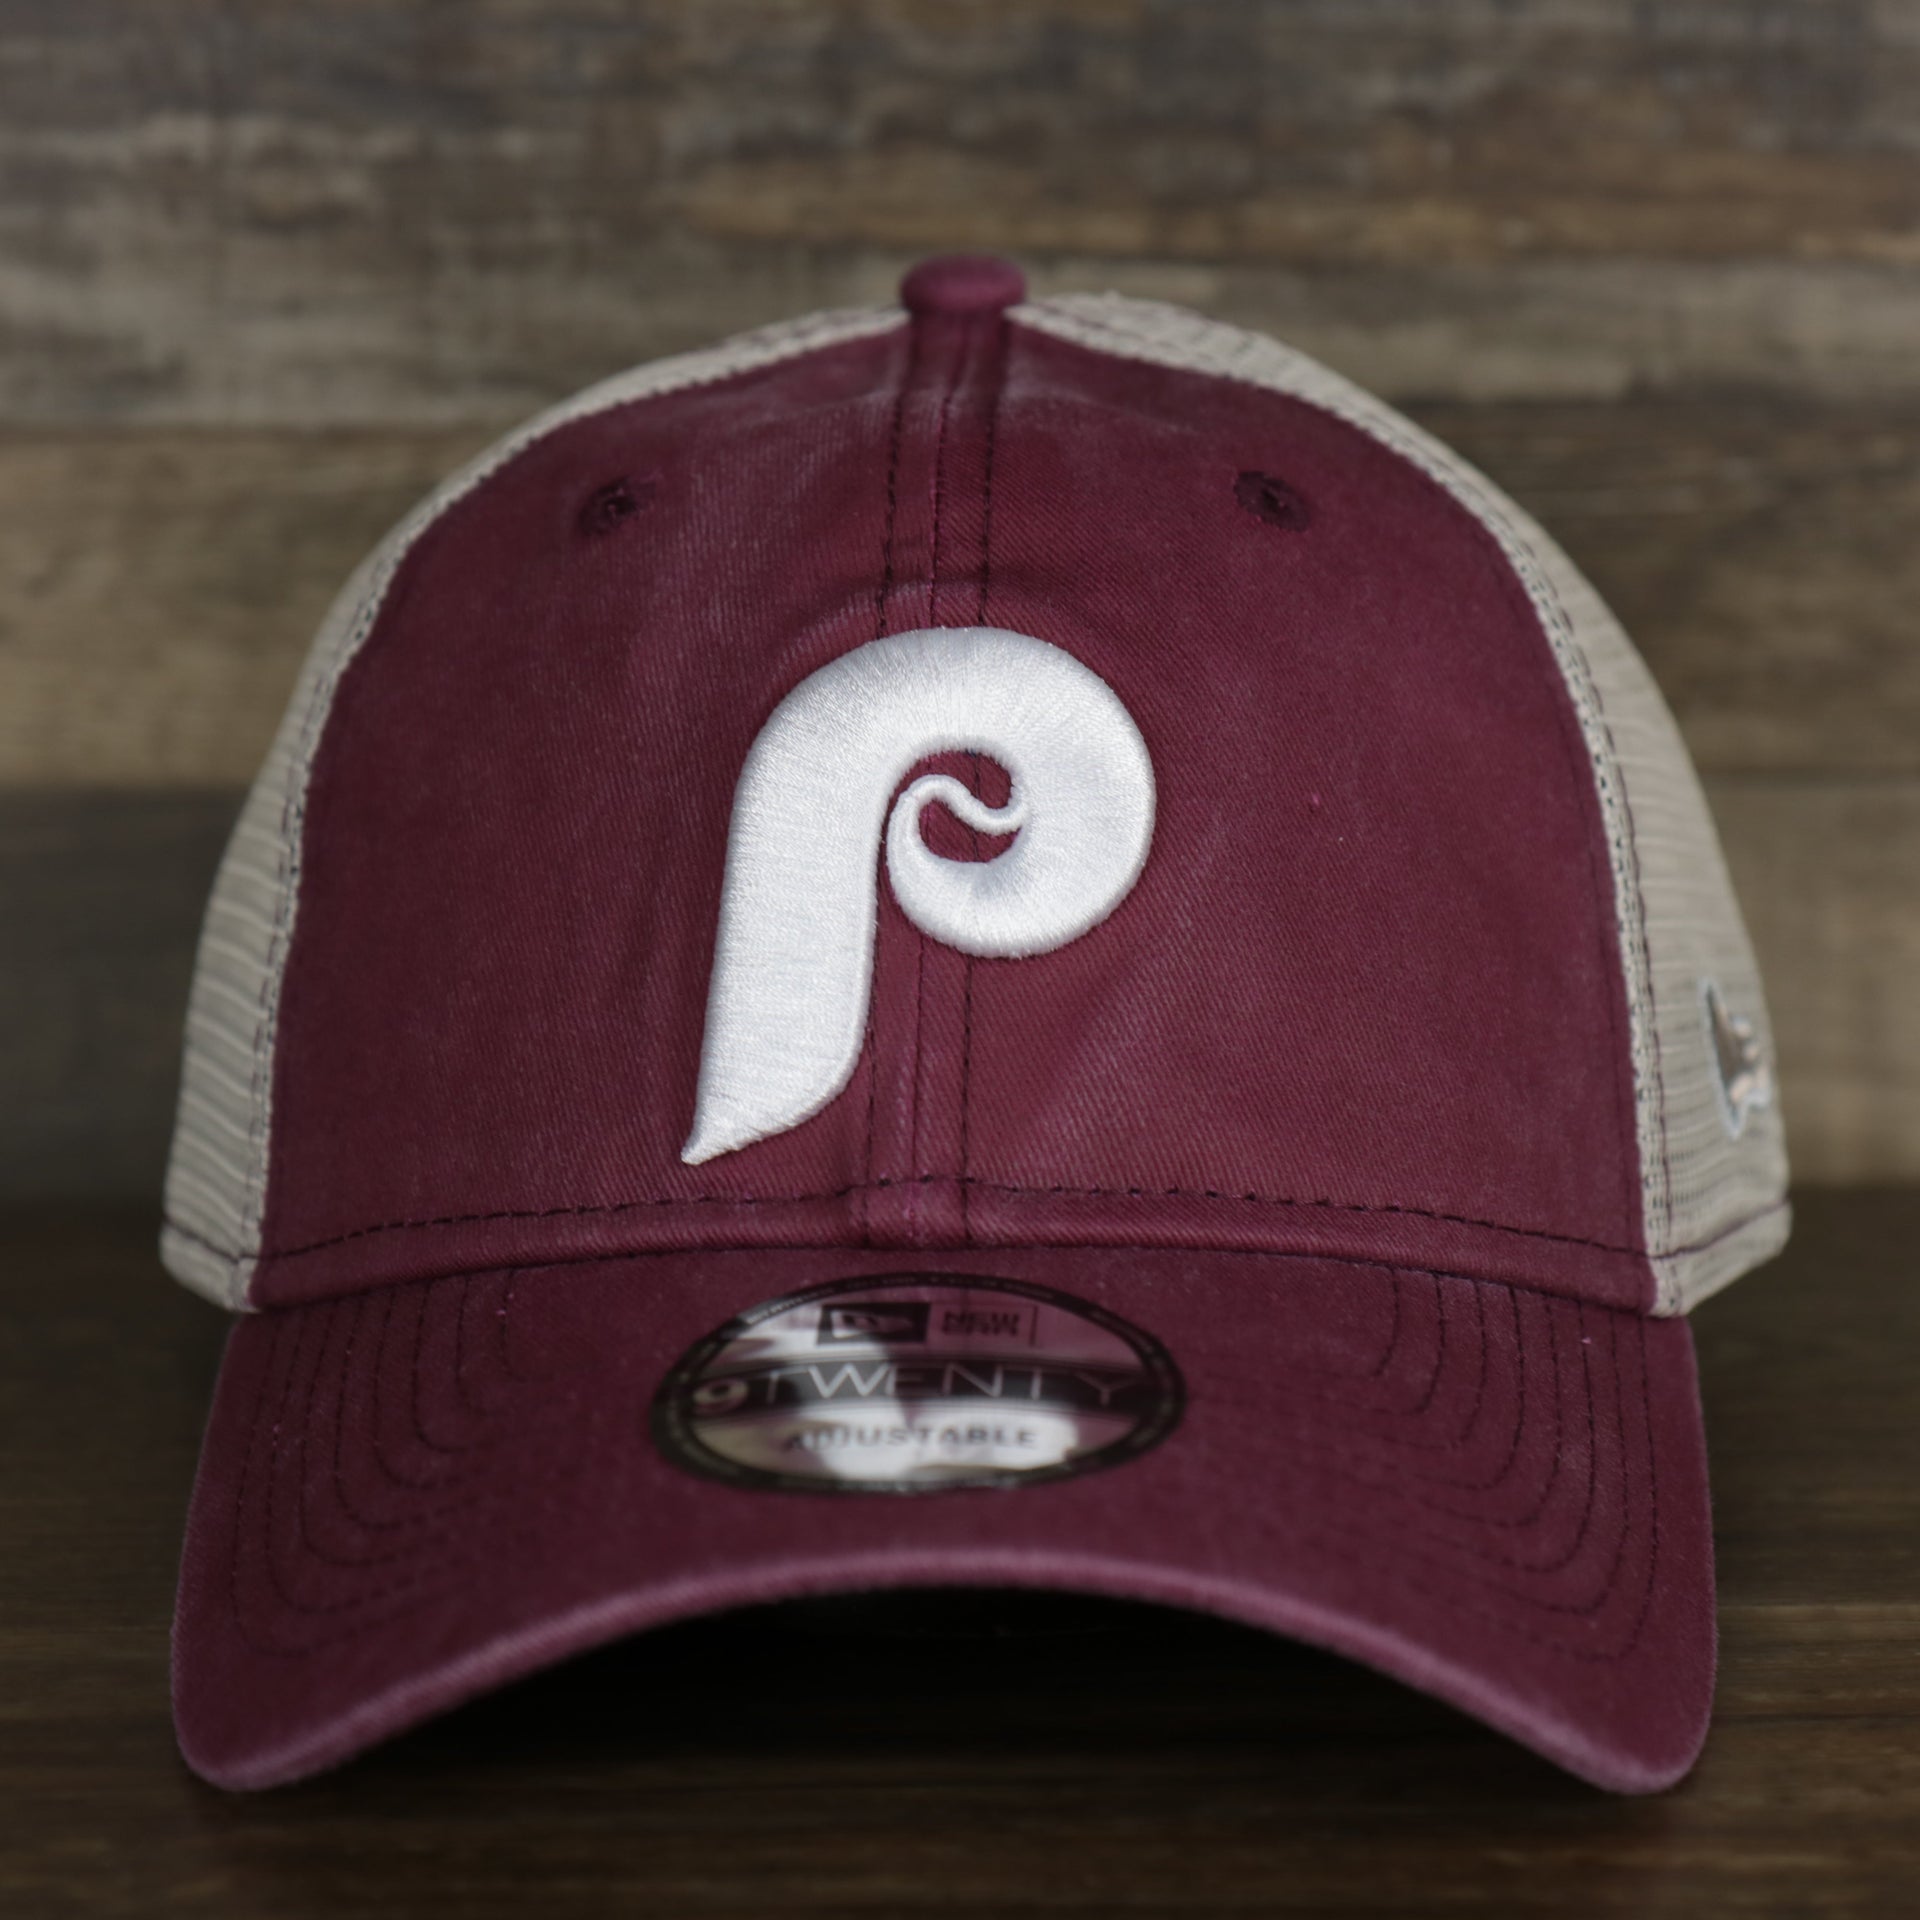 The front of the Philadelphia Phillies Cooperstown New Era 9Twenty Washed Trucker hat